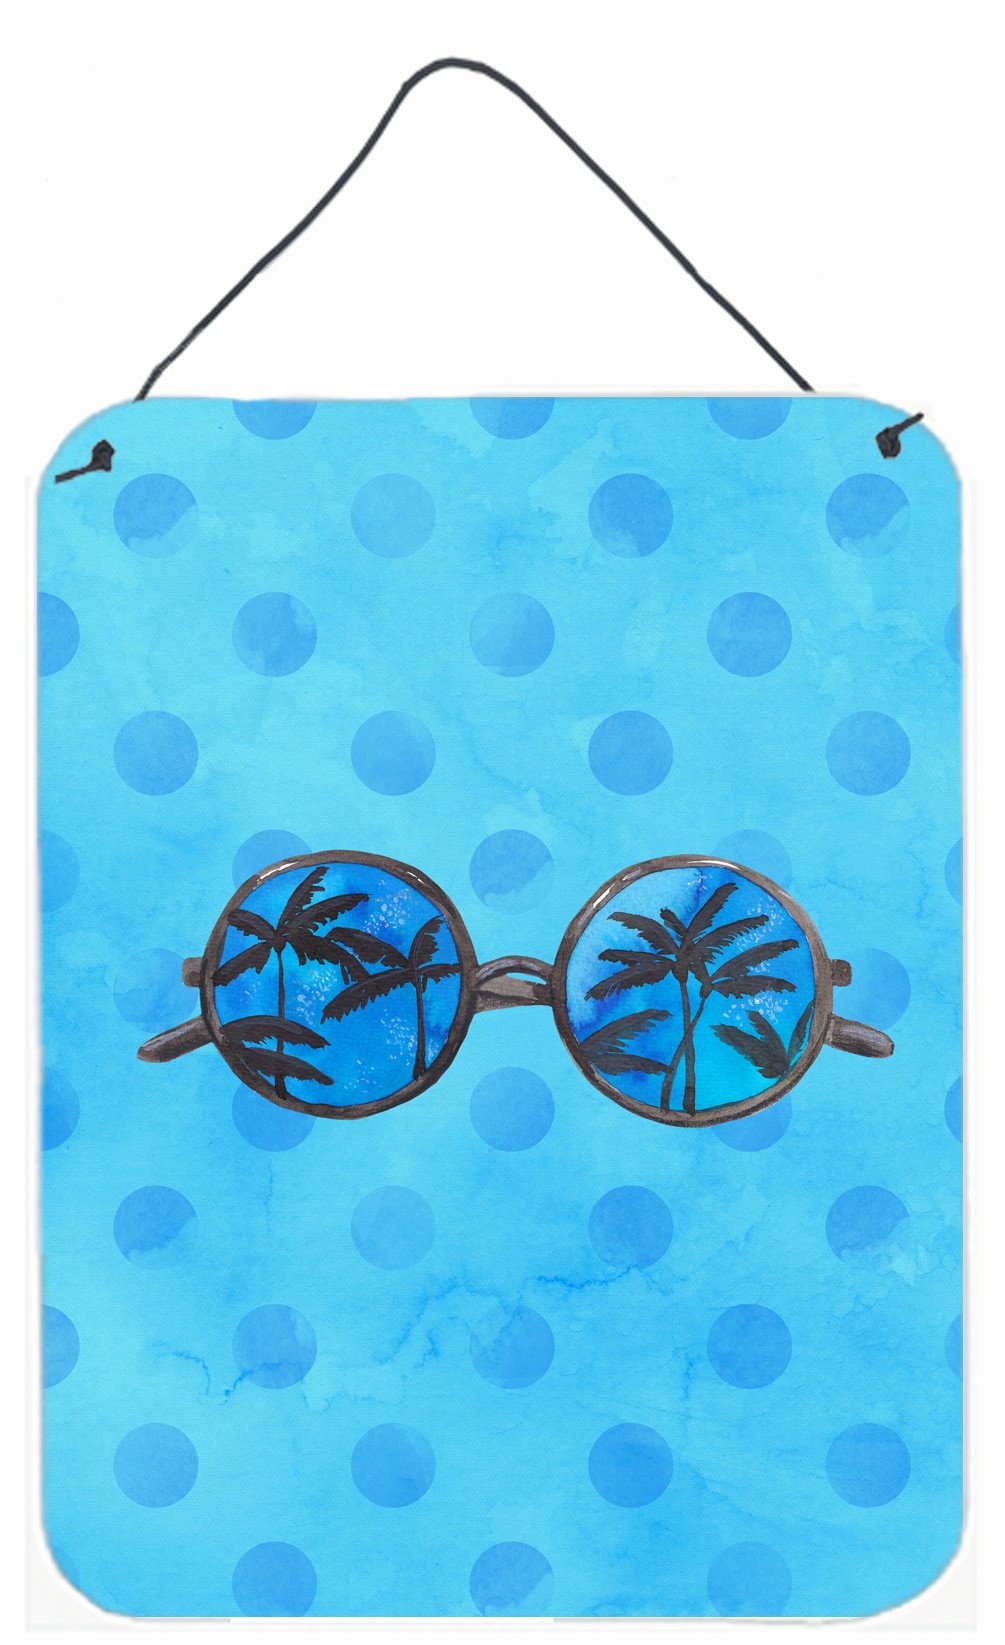 Sunglasses Blue Polkadot Wall or Door Hanging Prints BB8176DS1216 by Caroline's Treasures